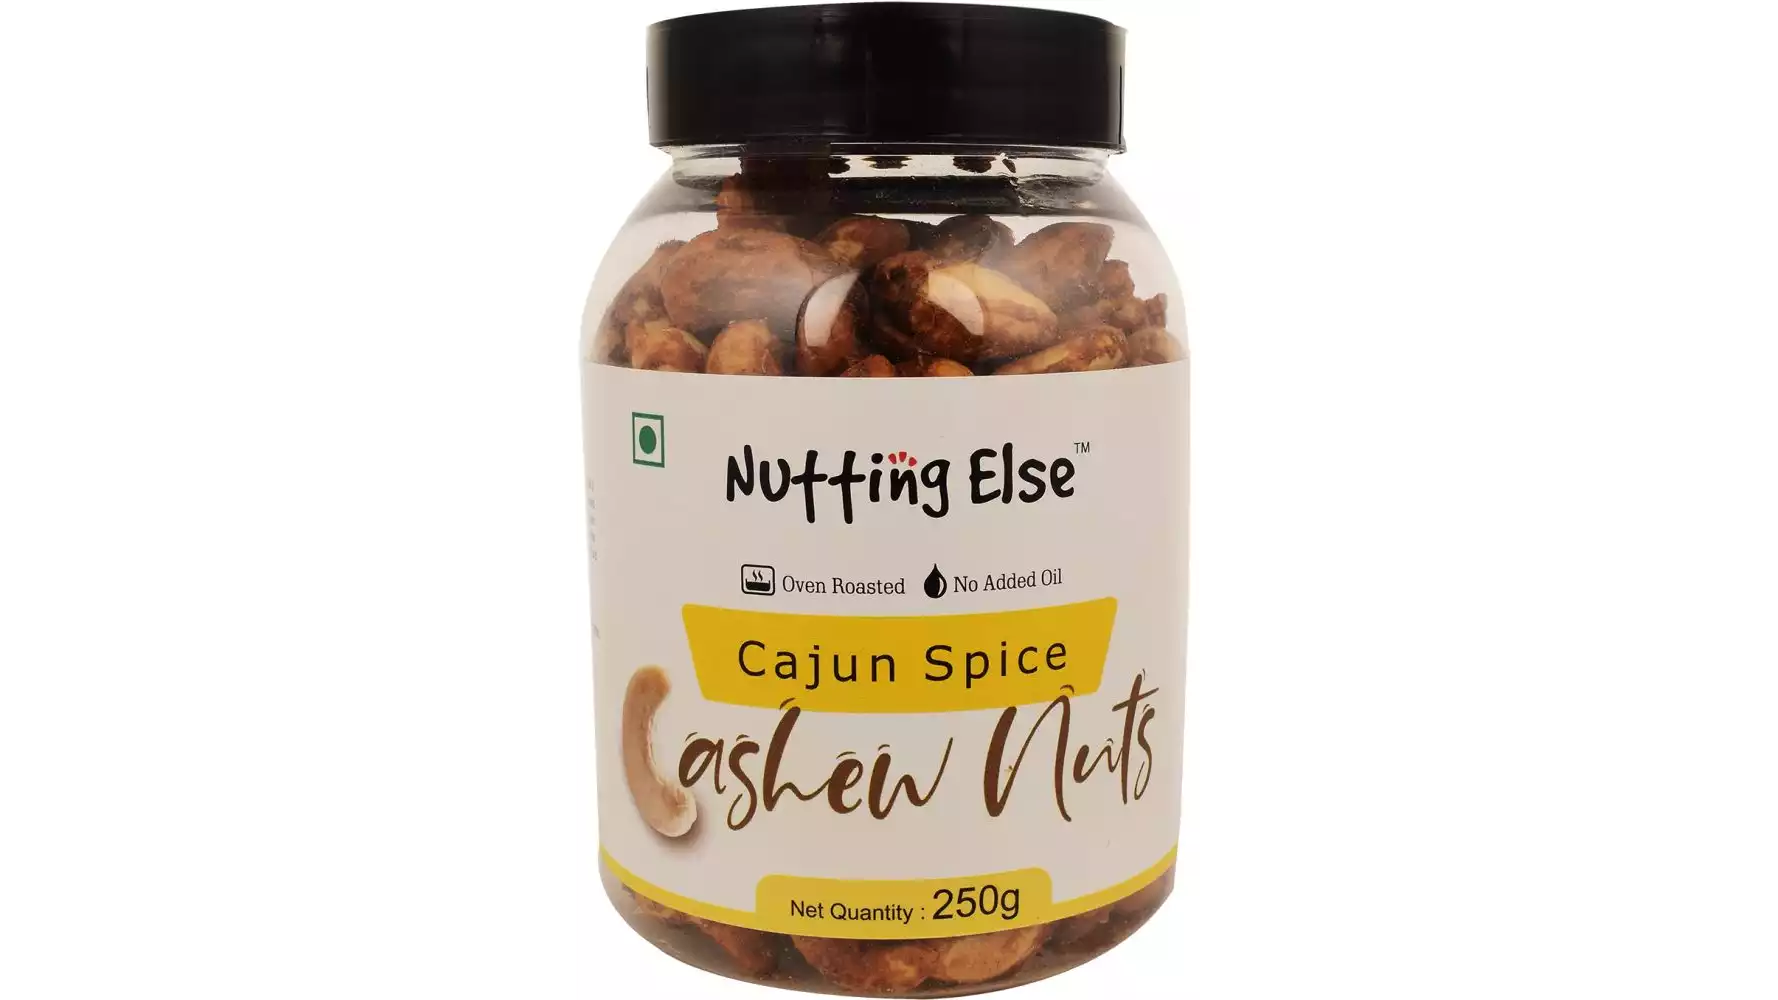 Nutting Else Cajun Spice Cashew Nuts (250g)